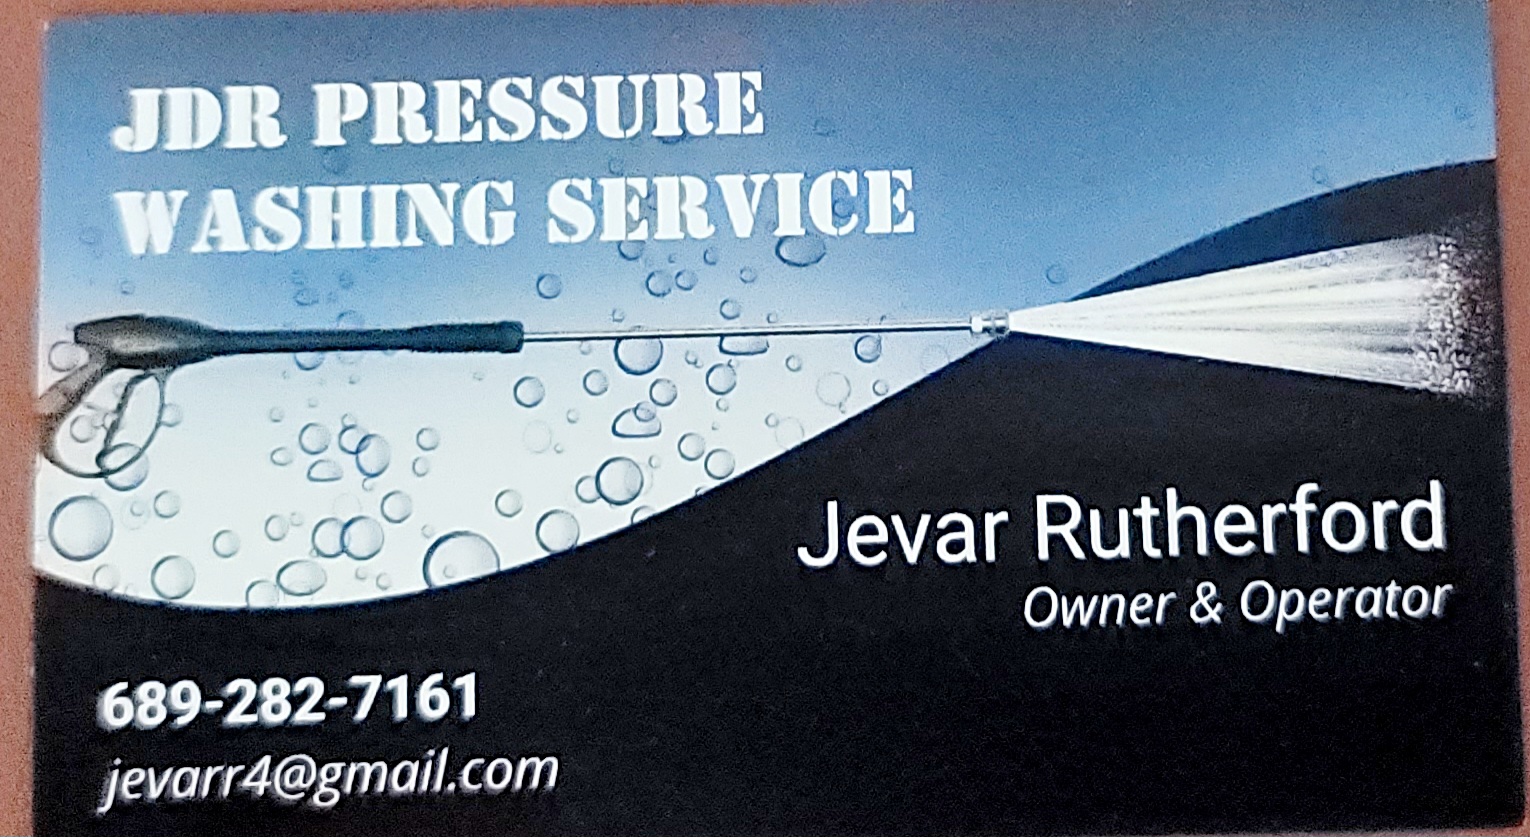 JDR Pressure Washing Service LLC Logo